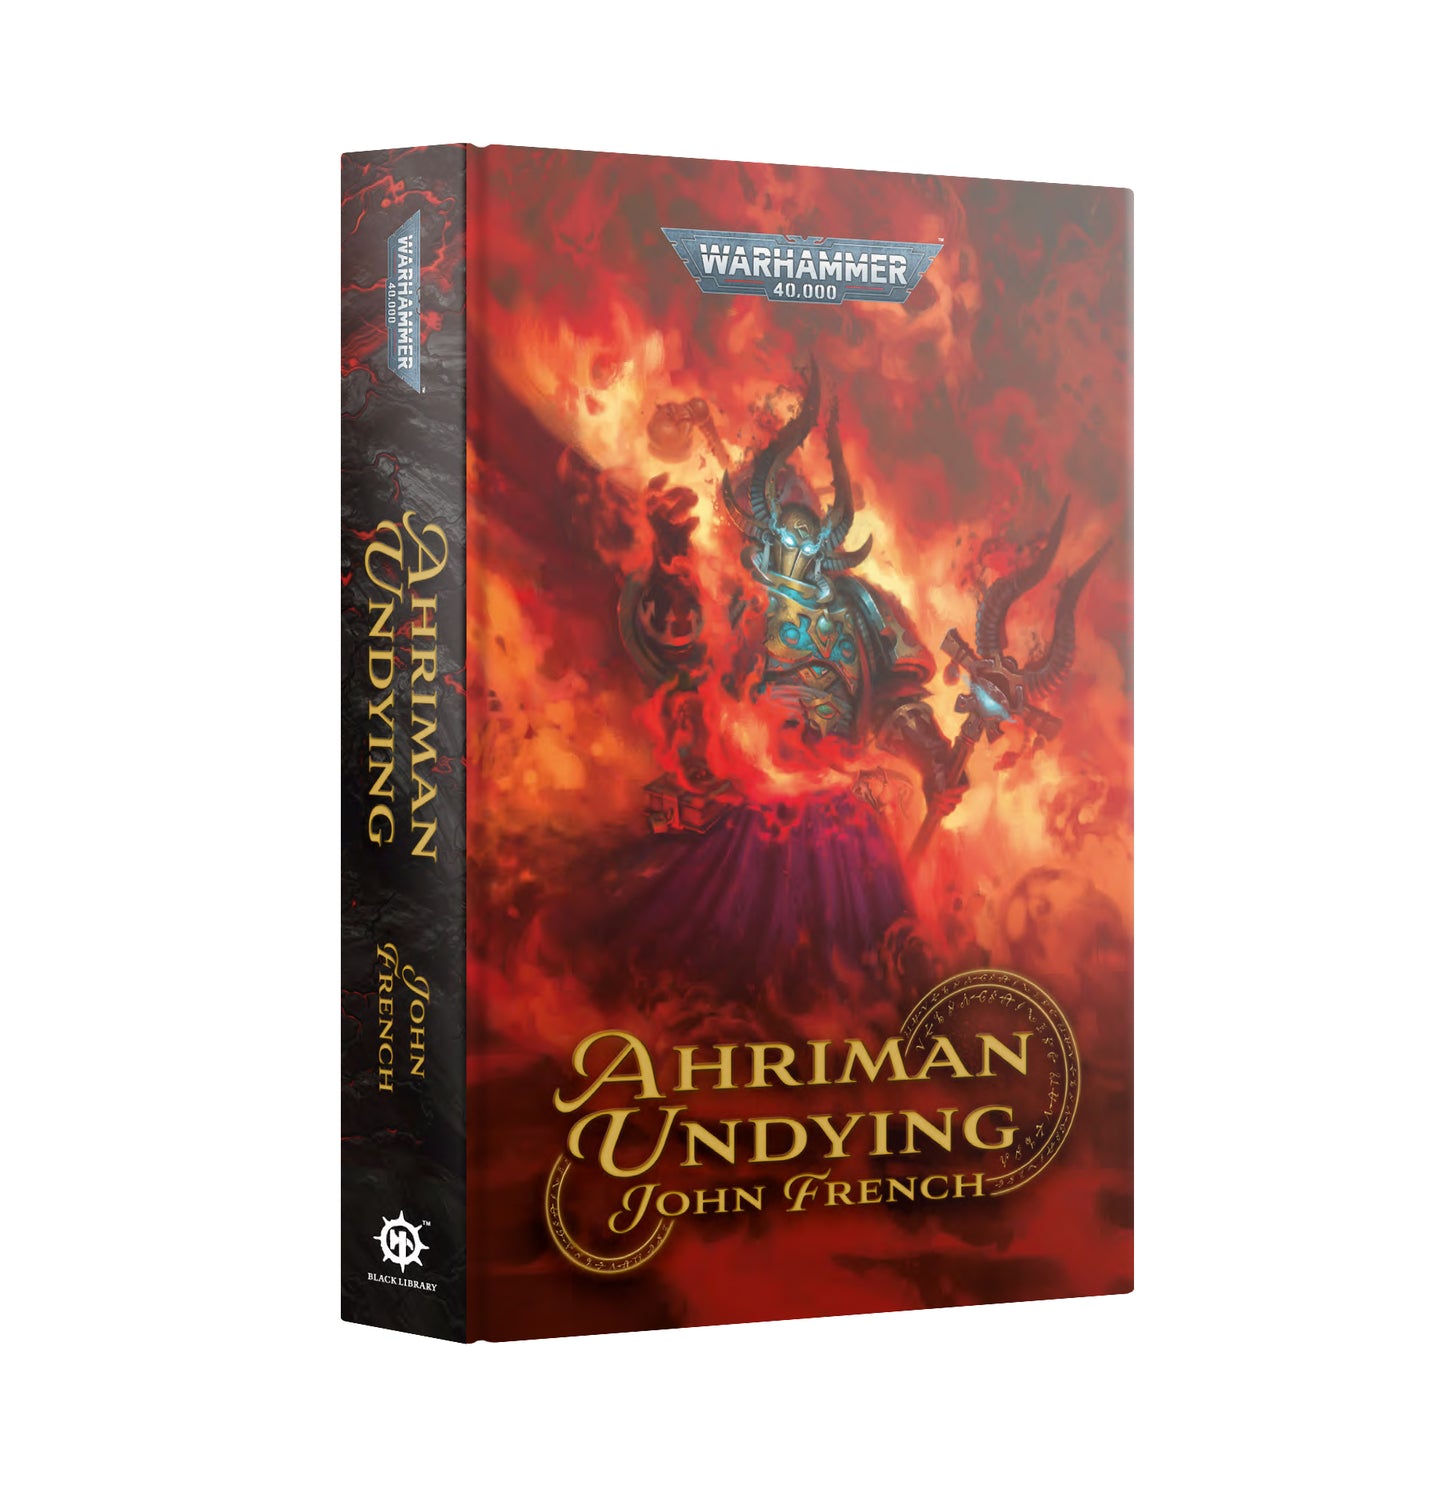 Ahriman Undying HB Warhammer 40K Black Library preorder 7/29  WBGames